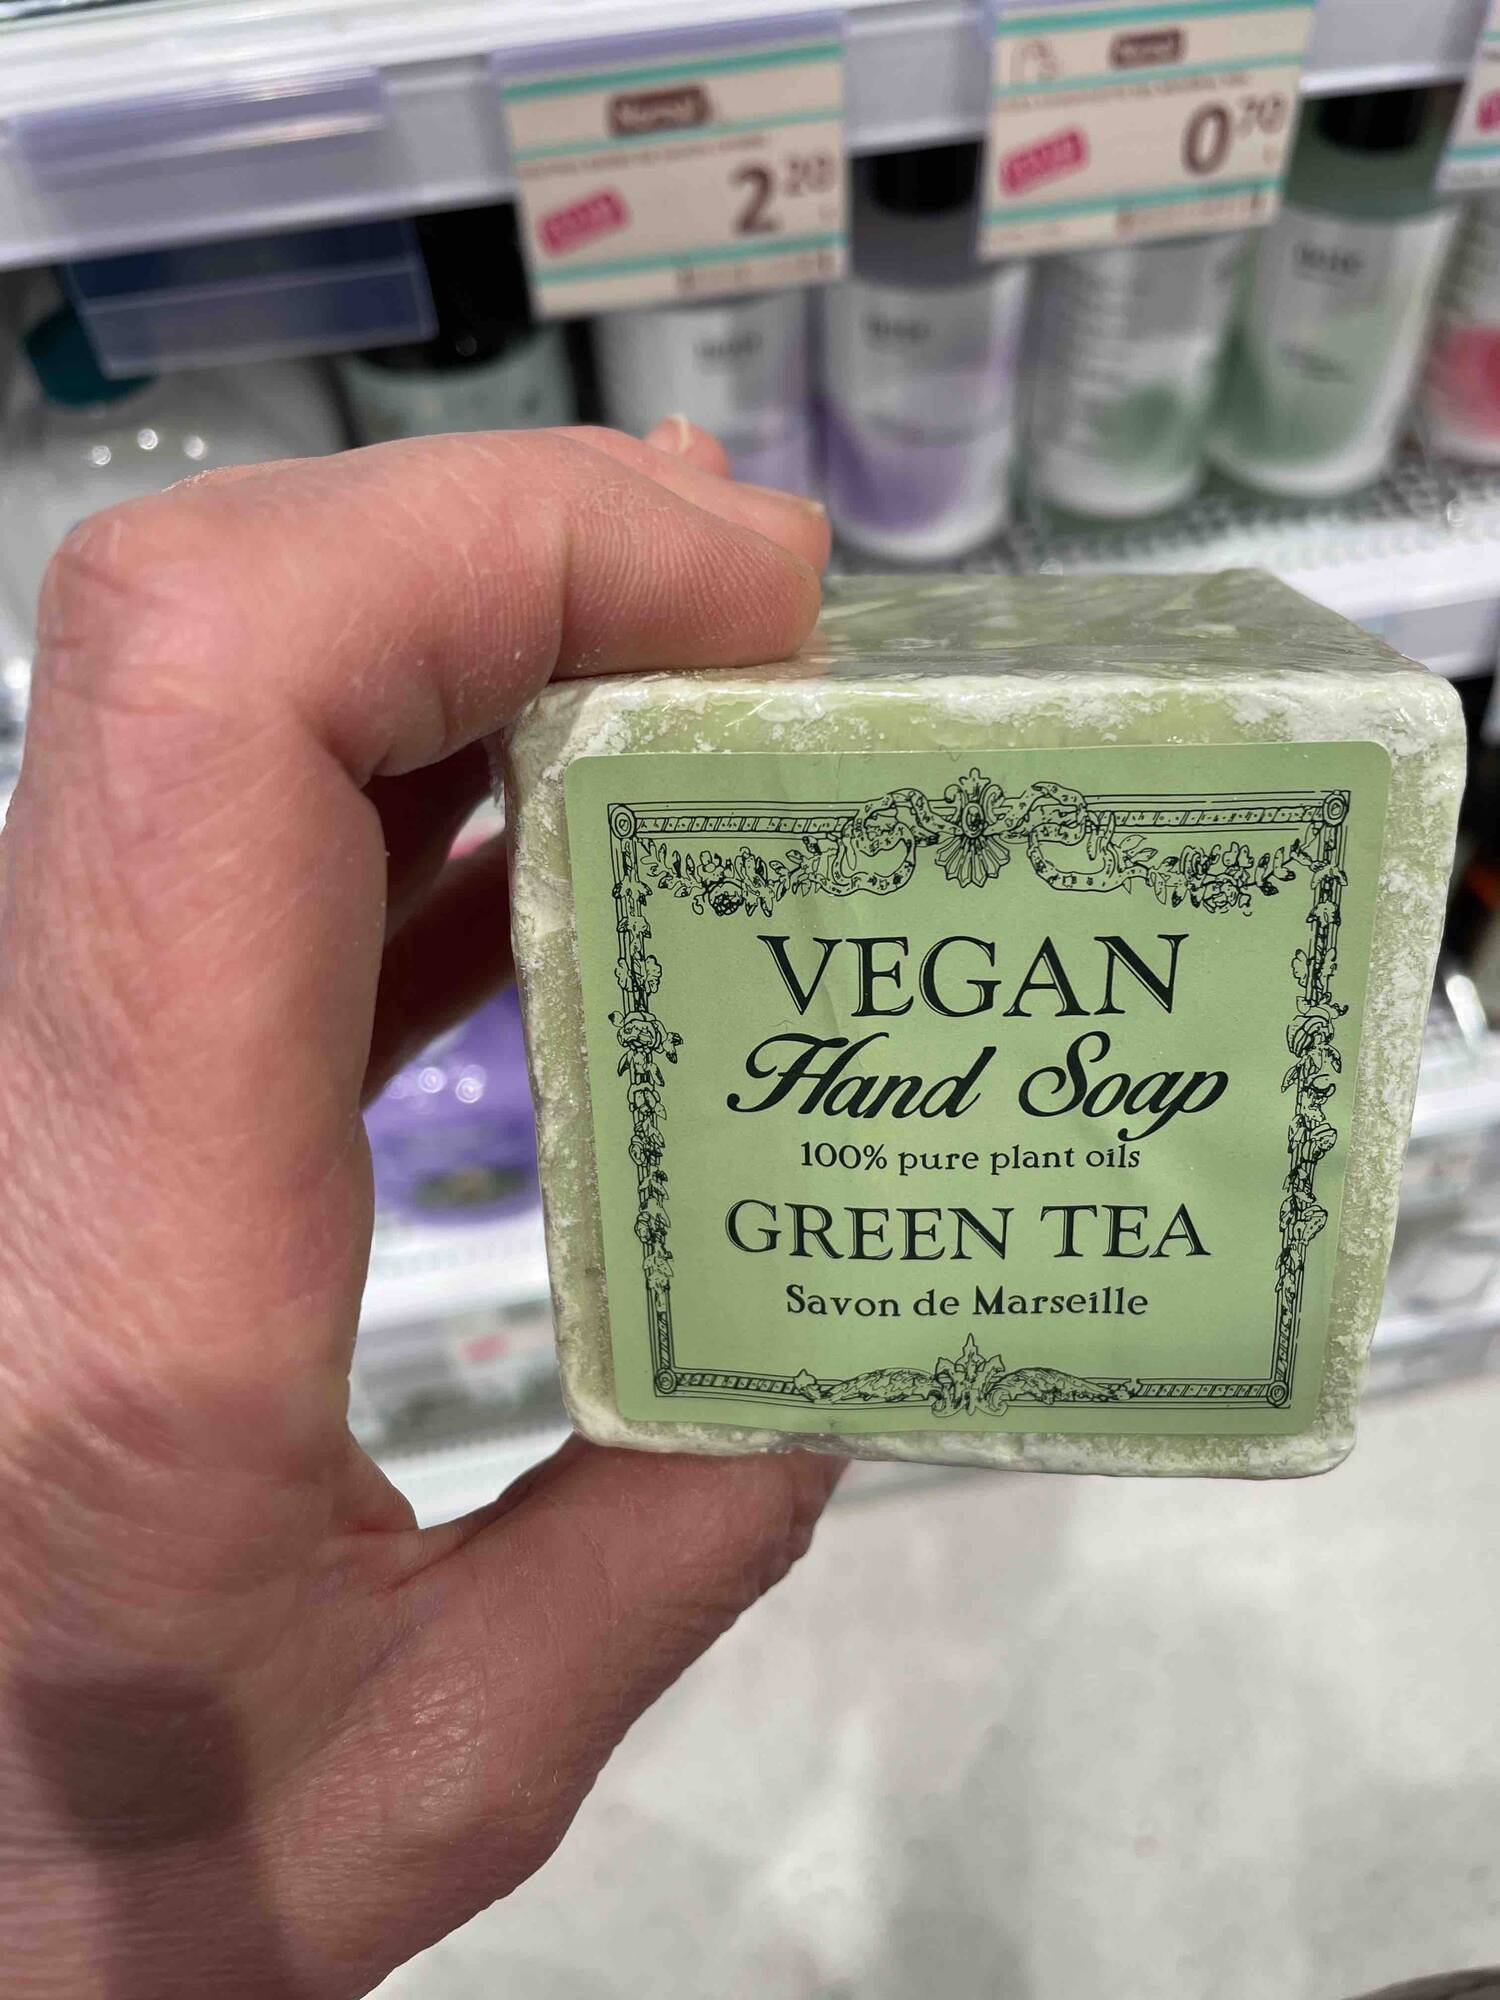 SAVON DE MARSEILLE - Green tea - Vegan hand soap 